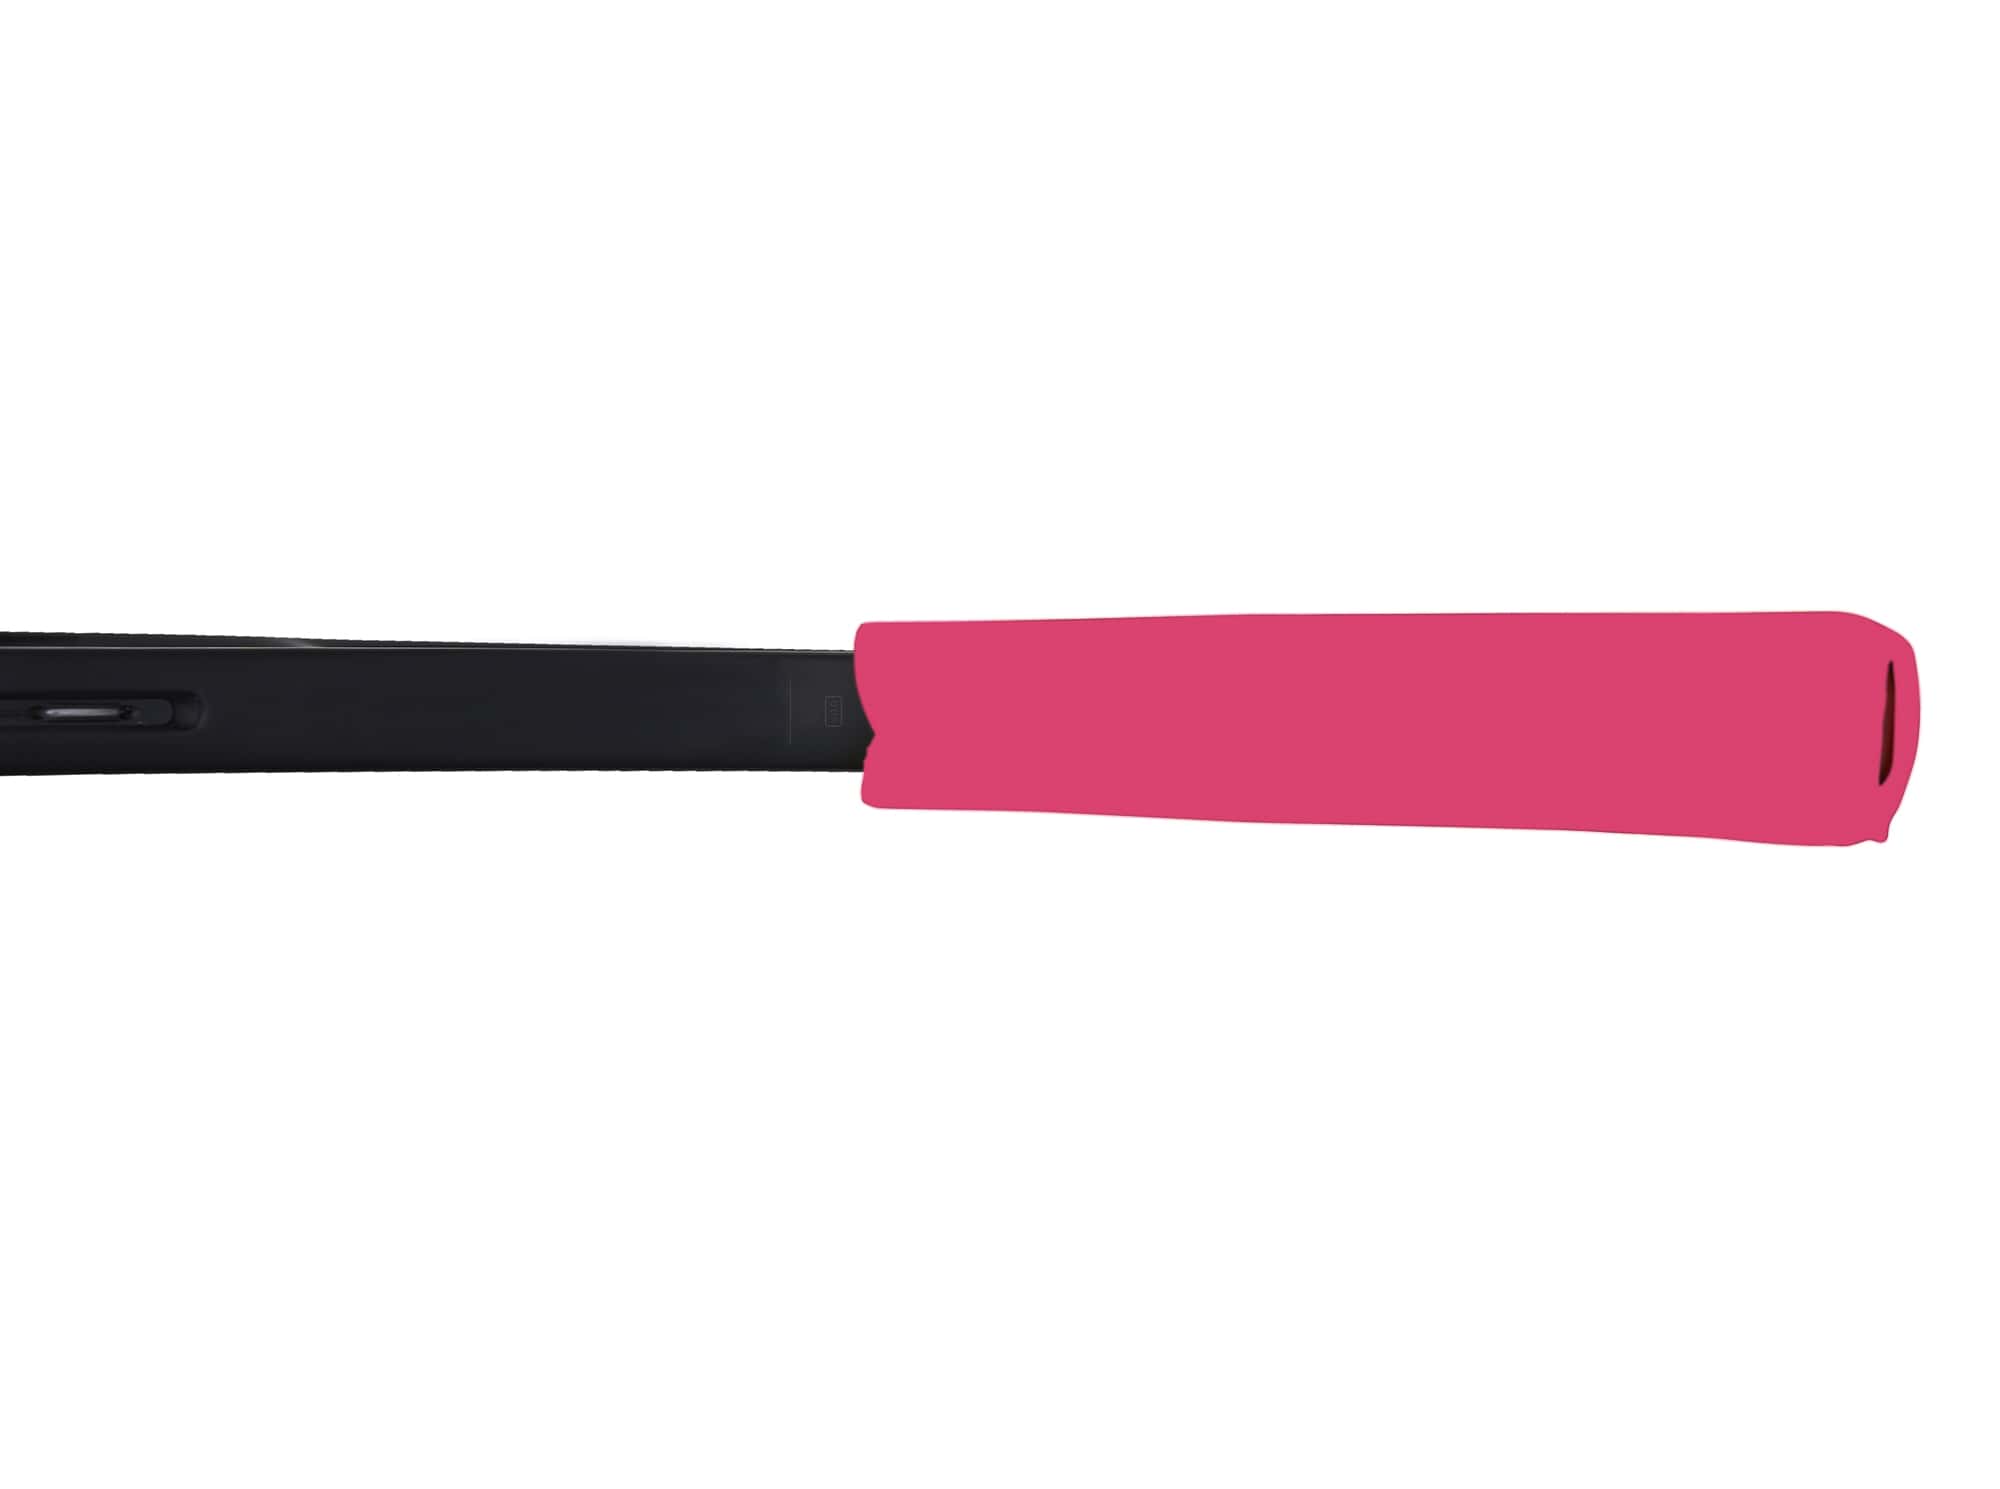 Epirus Neoprene Grip Cover (Neon Pink) keeps your tennis grips protected